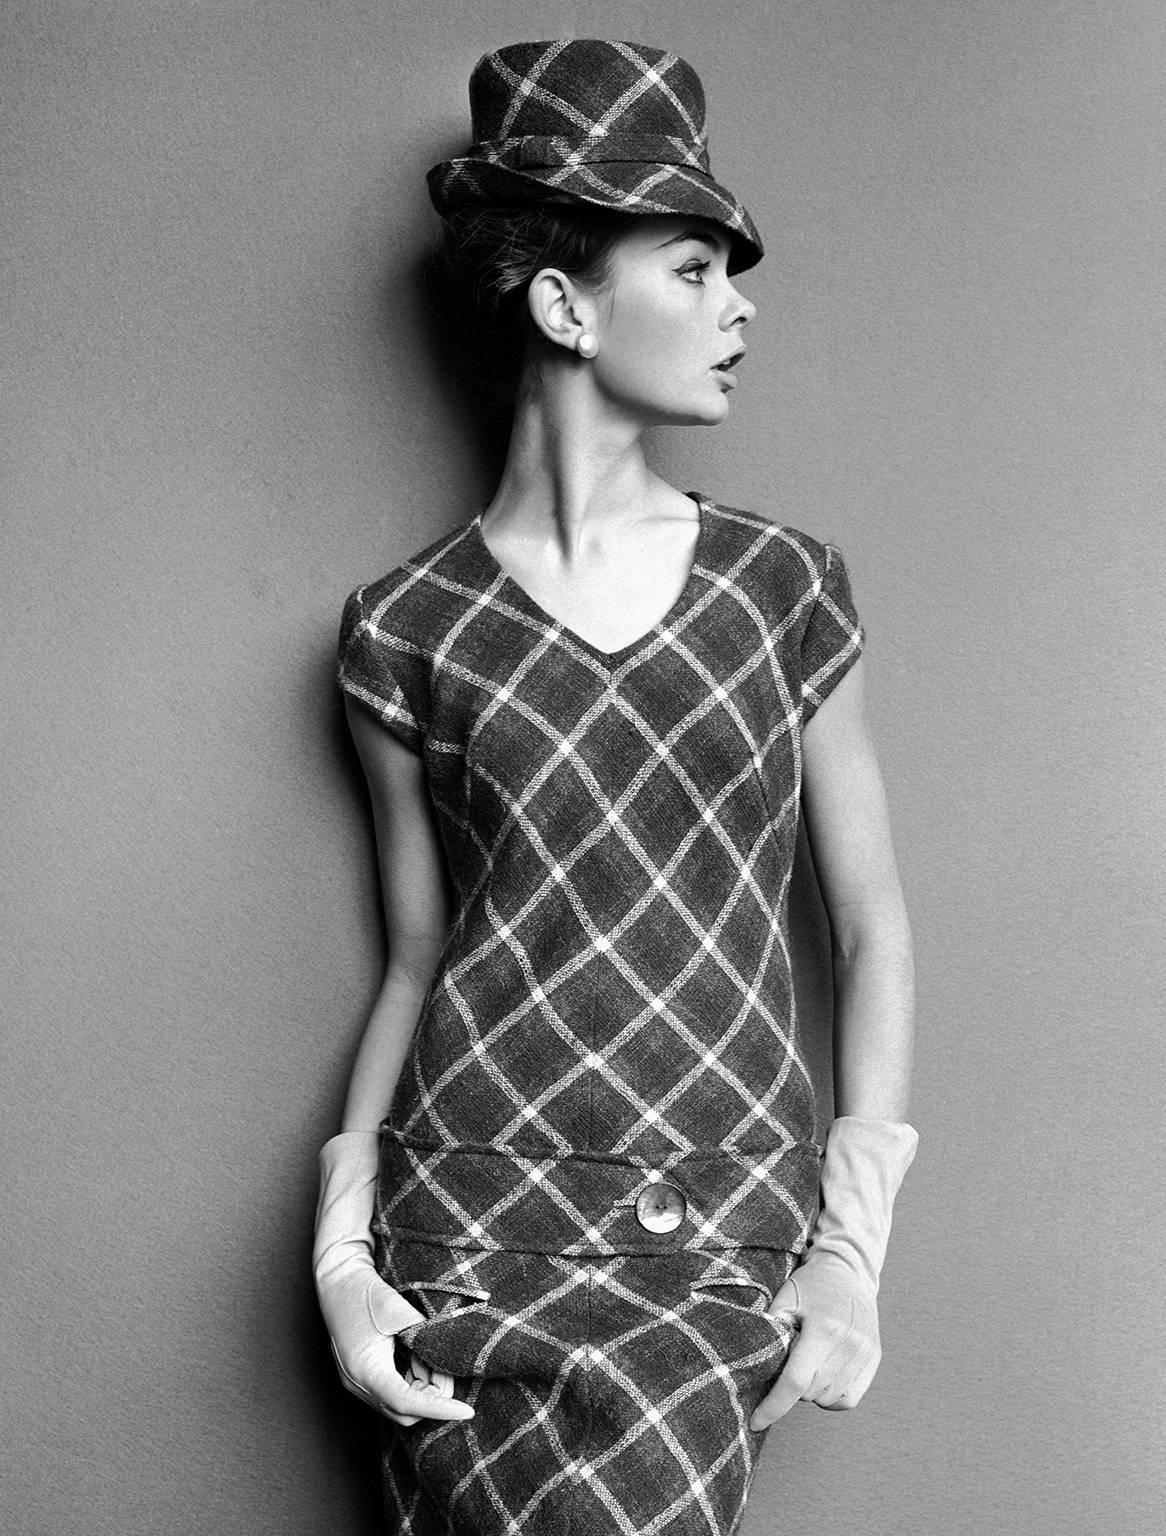 John French Black and White Photograph - 'Quant Dress' Limited Edition silver gelatin print V&A Portfolio